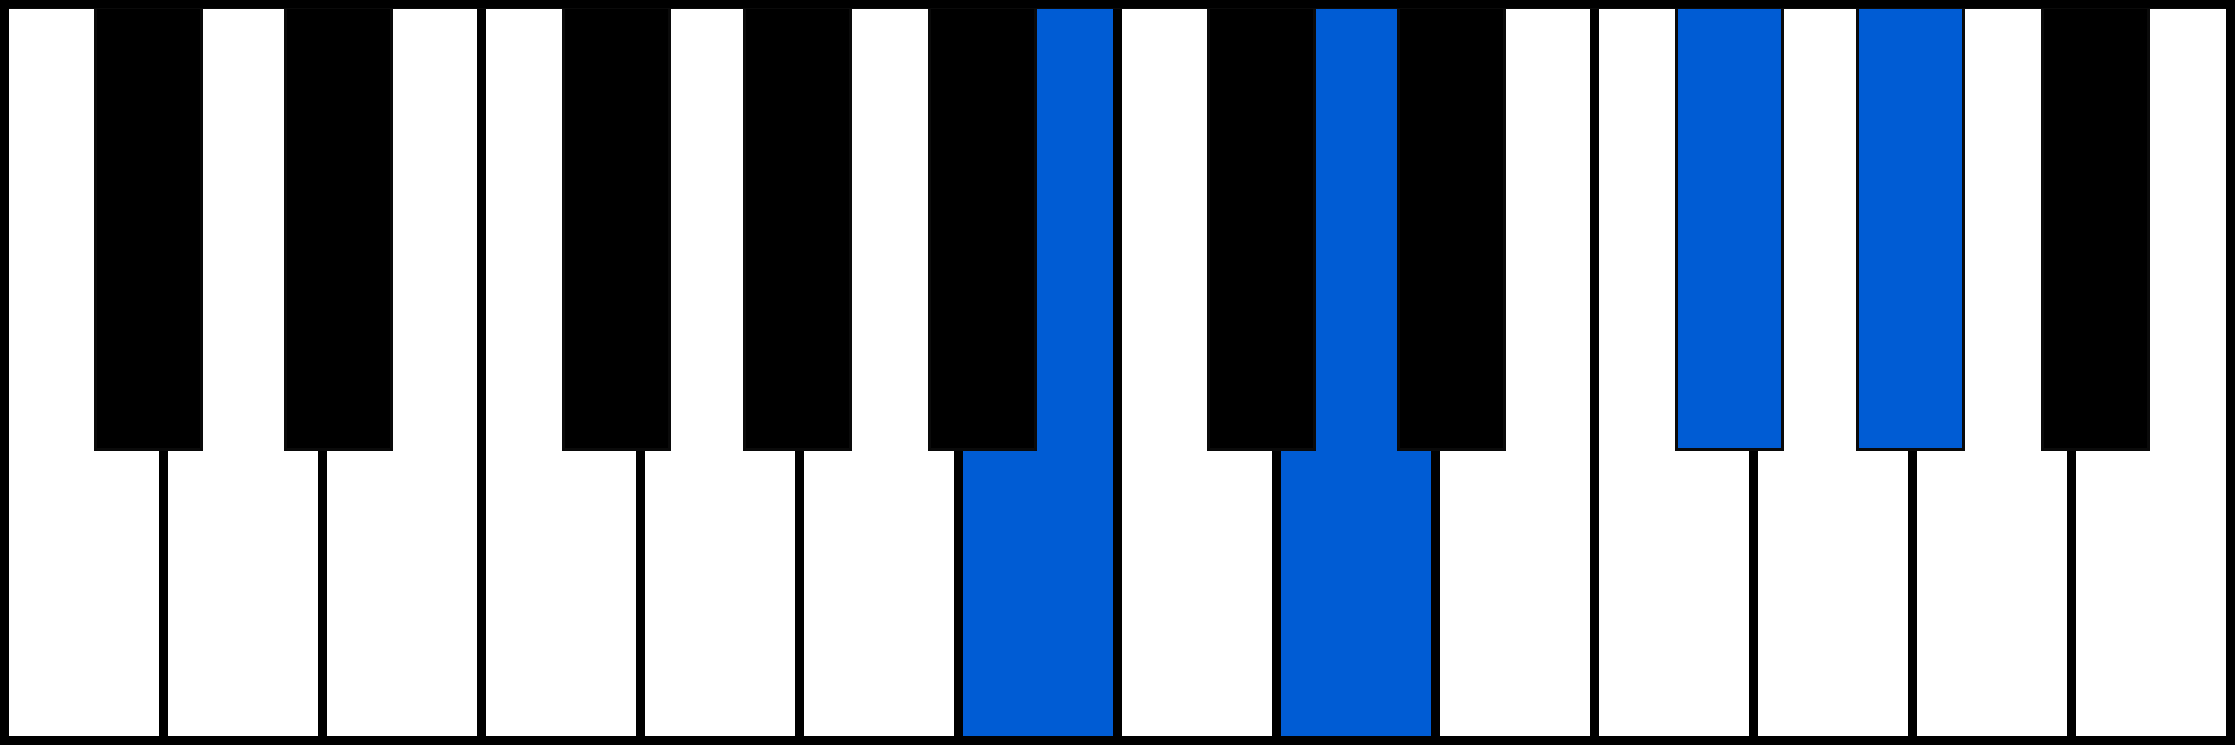 Bm6 piano chord fingering